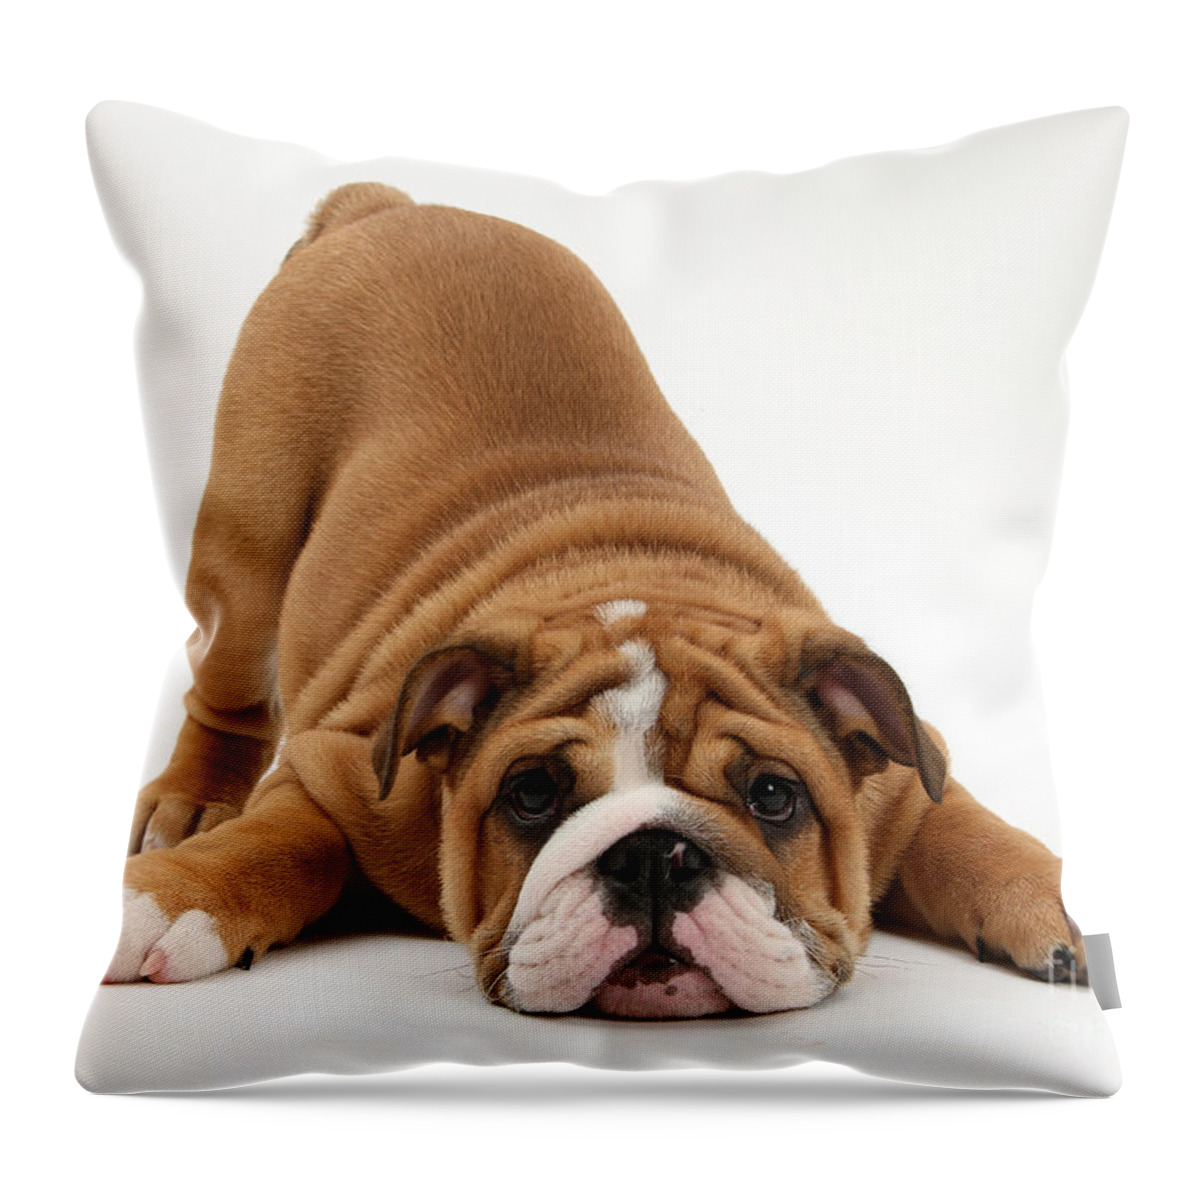 Dog Throw Pillow featuring the photograph Playful Bulldog Pup by Mark Taylor